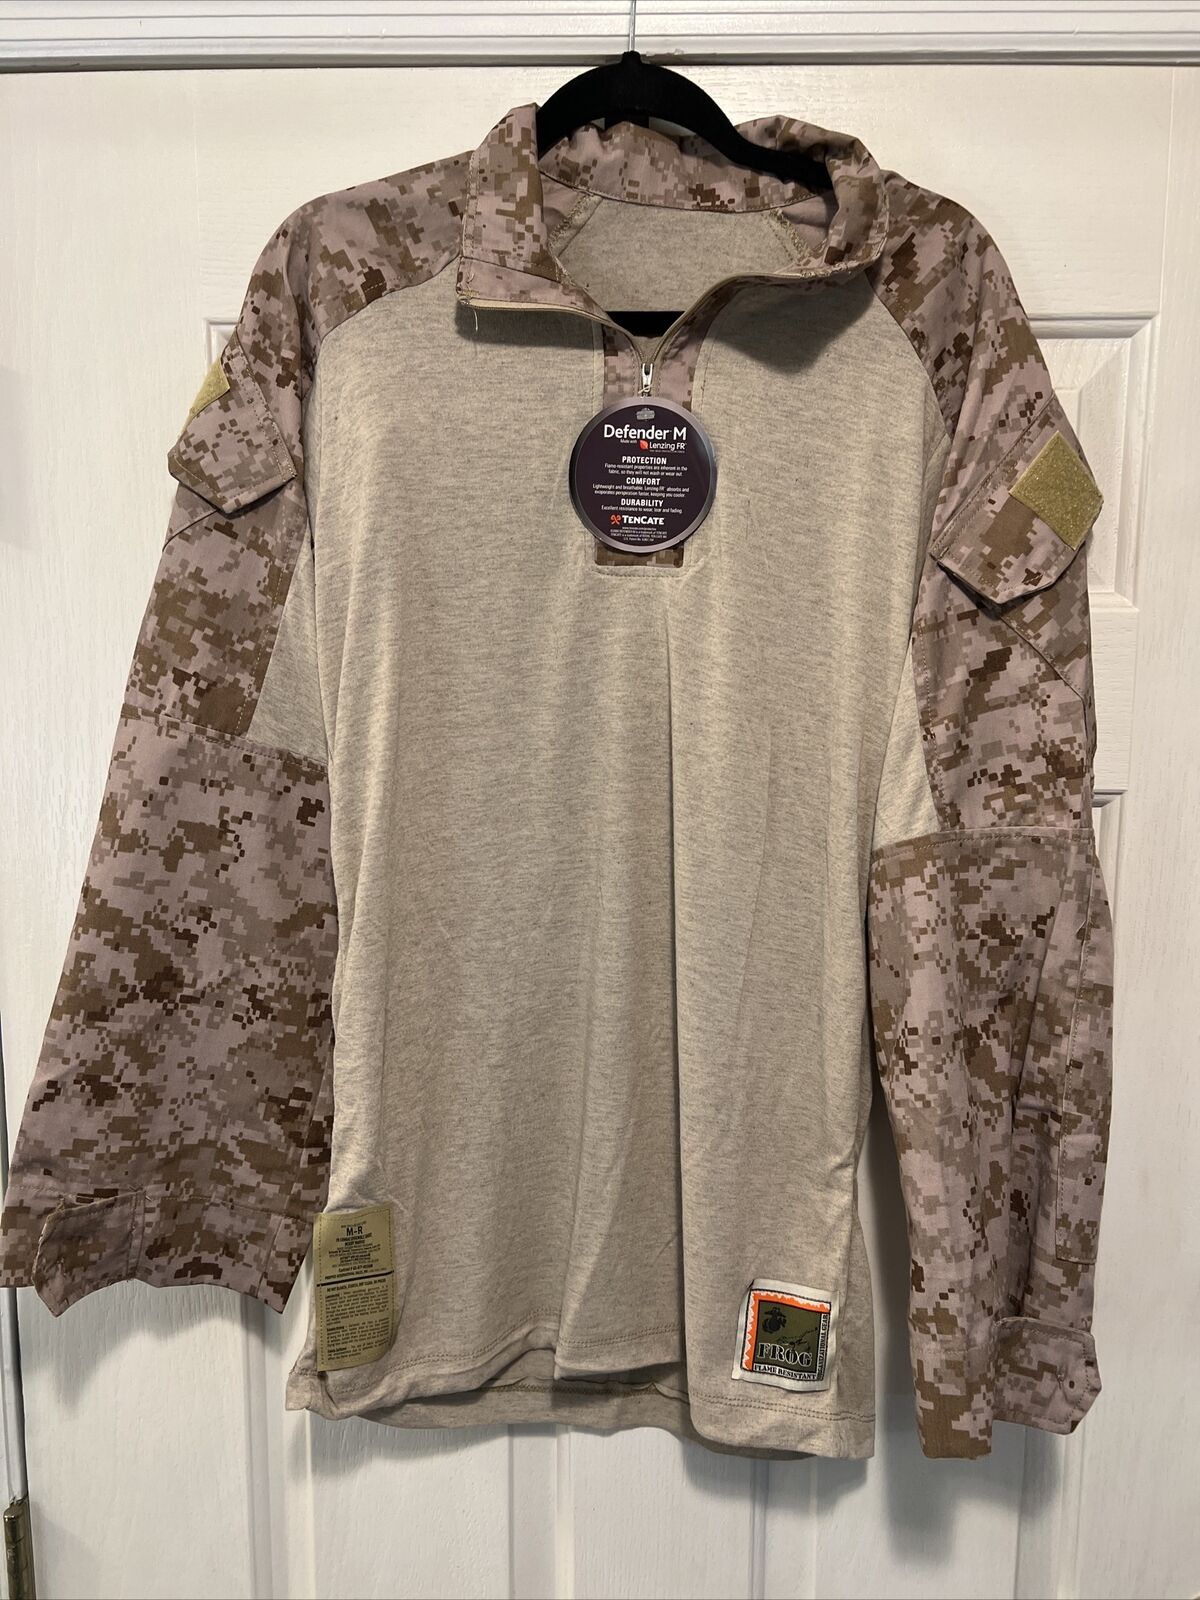 USMC Desert Marpat Camo Combat Frog Shirt FR Defender M Medium Regular NOS w Tag